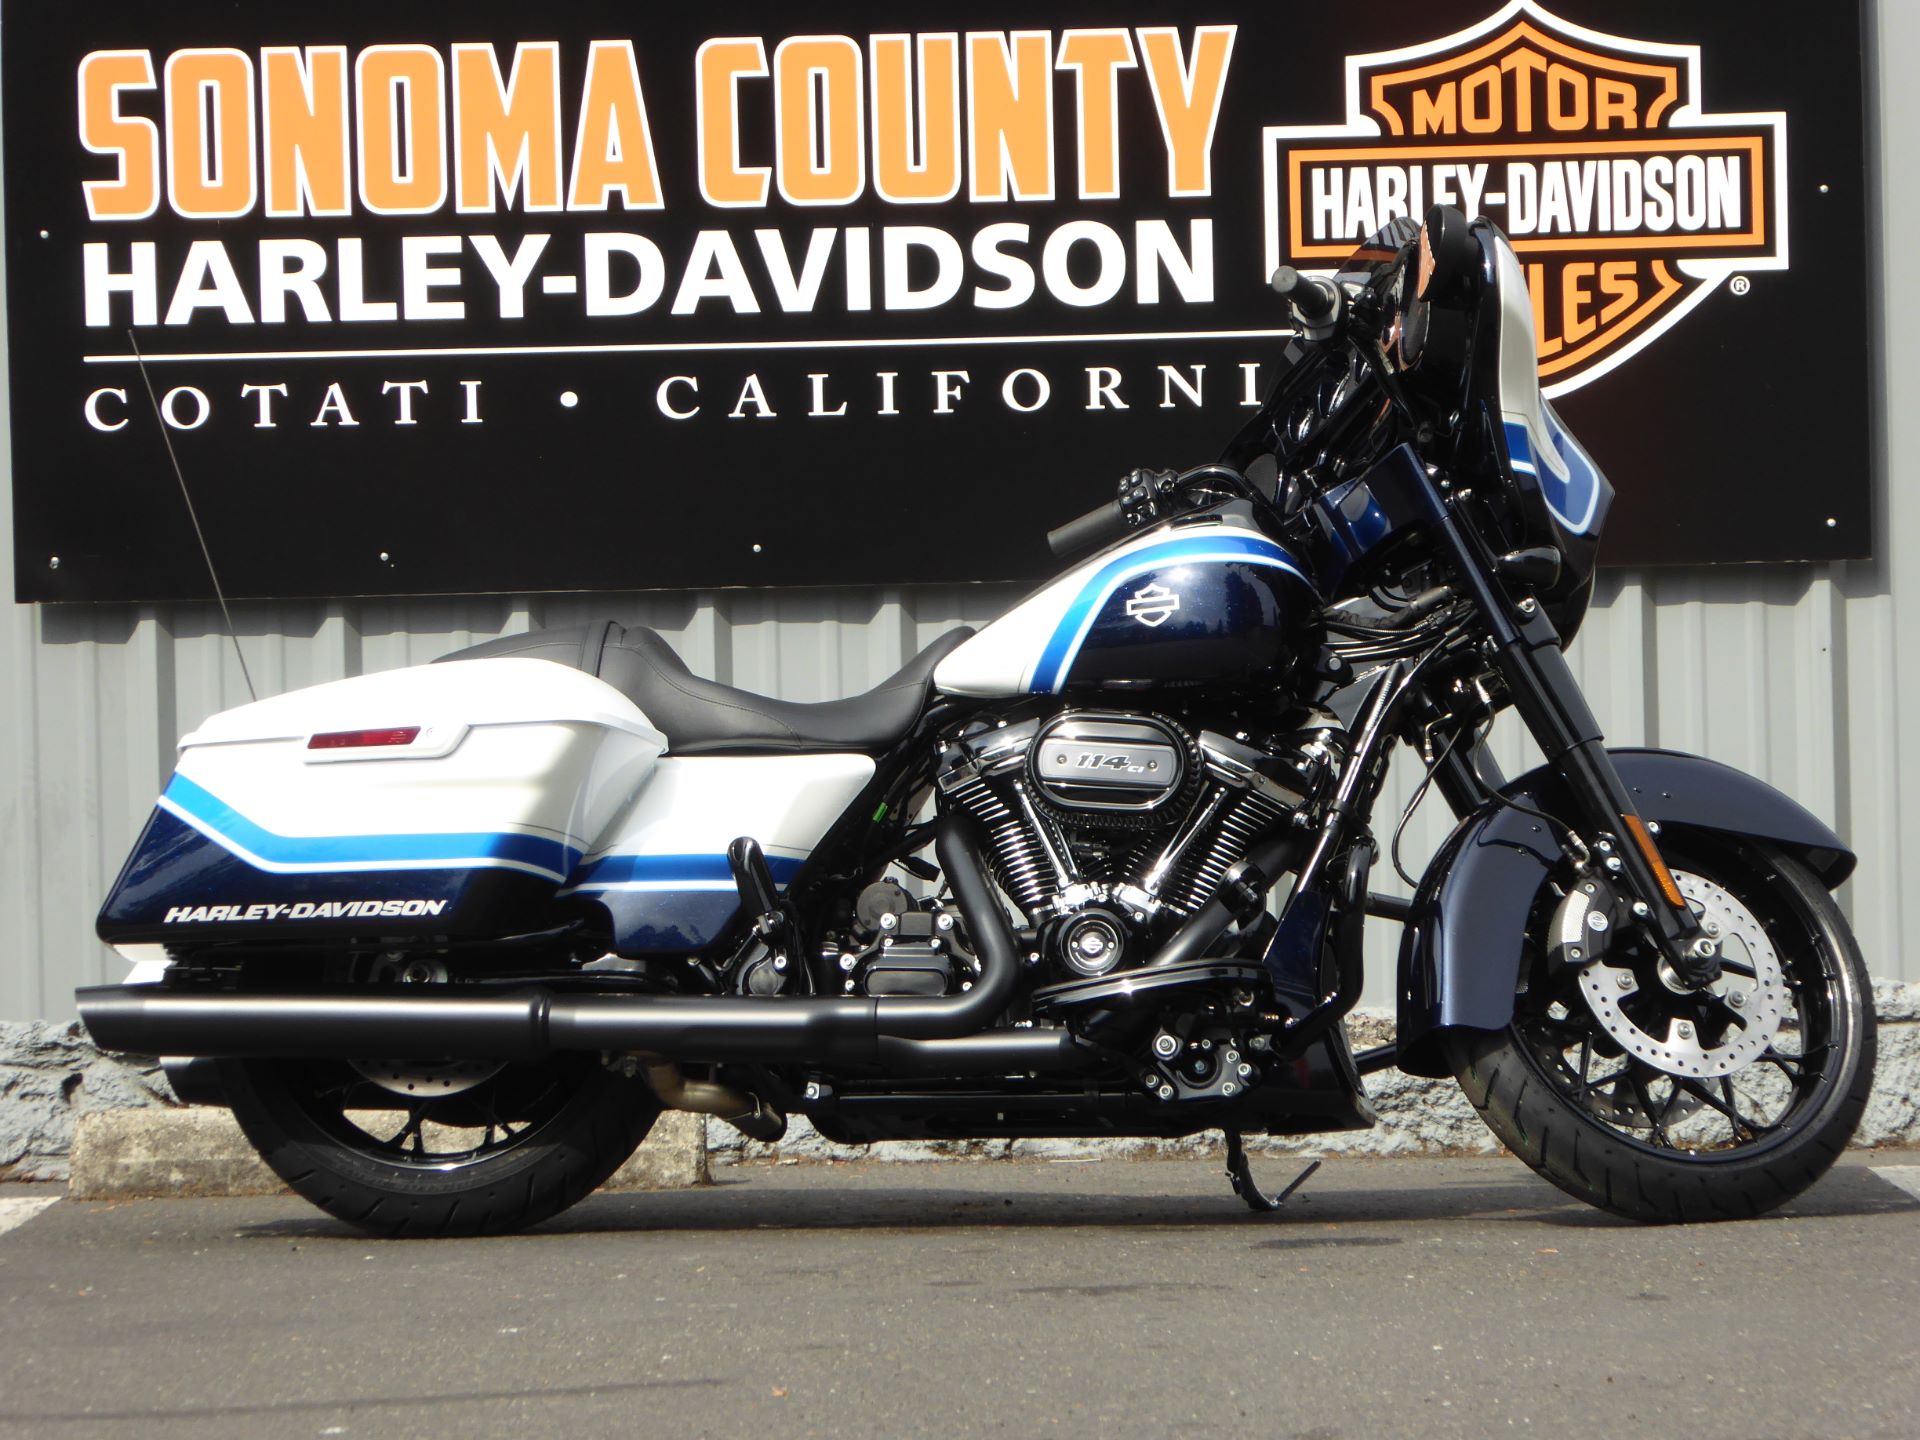 2021 Harley-Davidson Street Glide® Special in Cotati, California - Photo 1